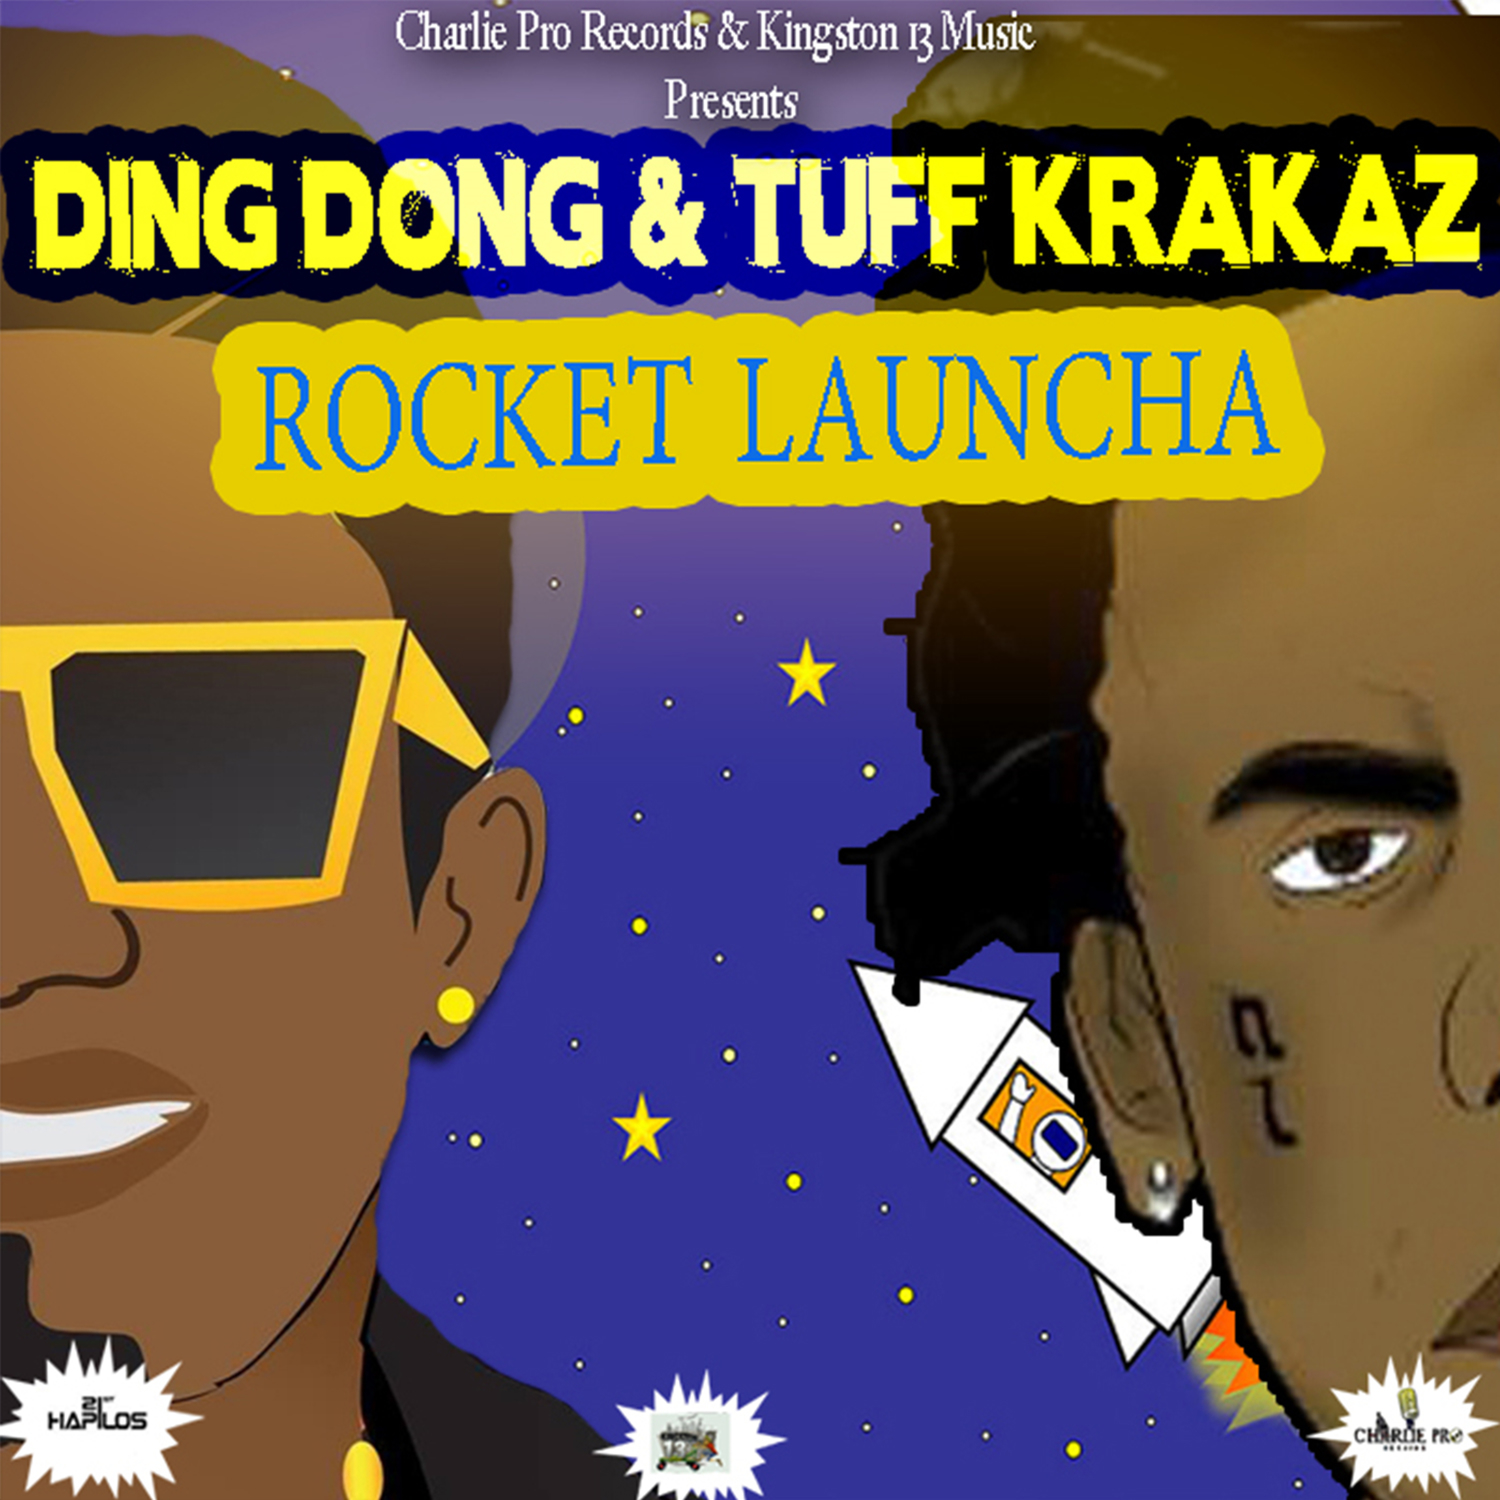 Rocket Launcha (feat. Tuff Krakaz) - Single